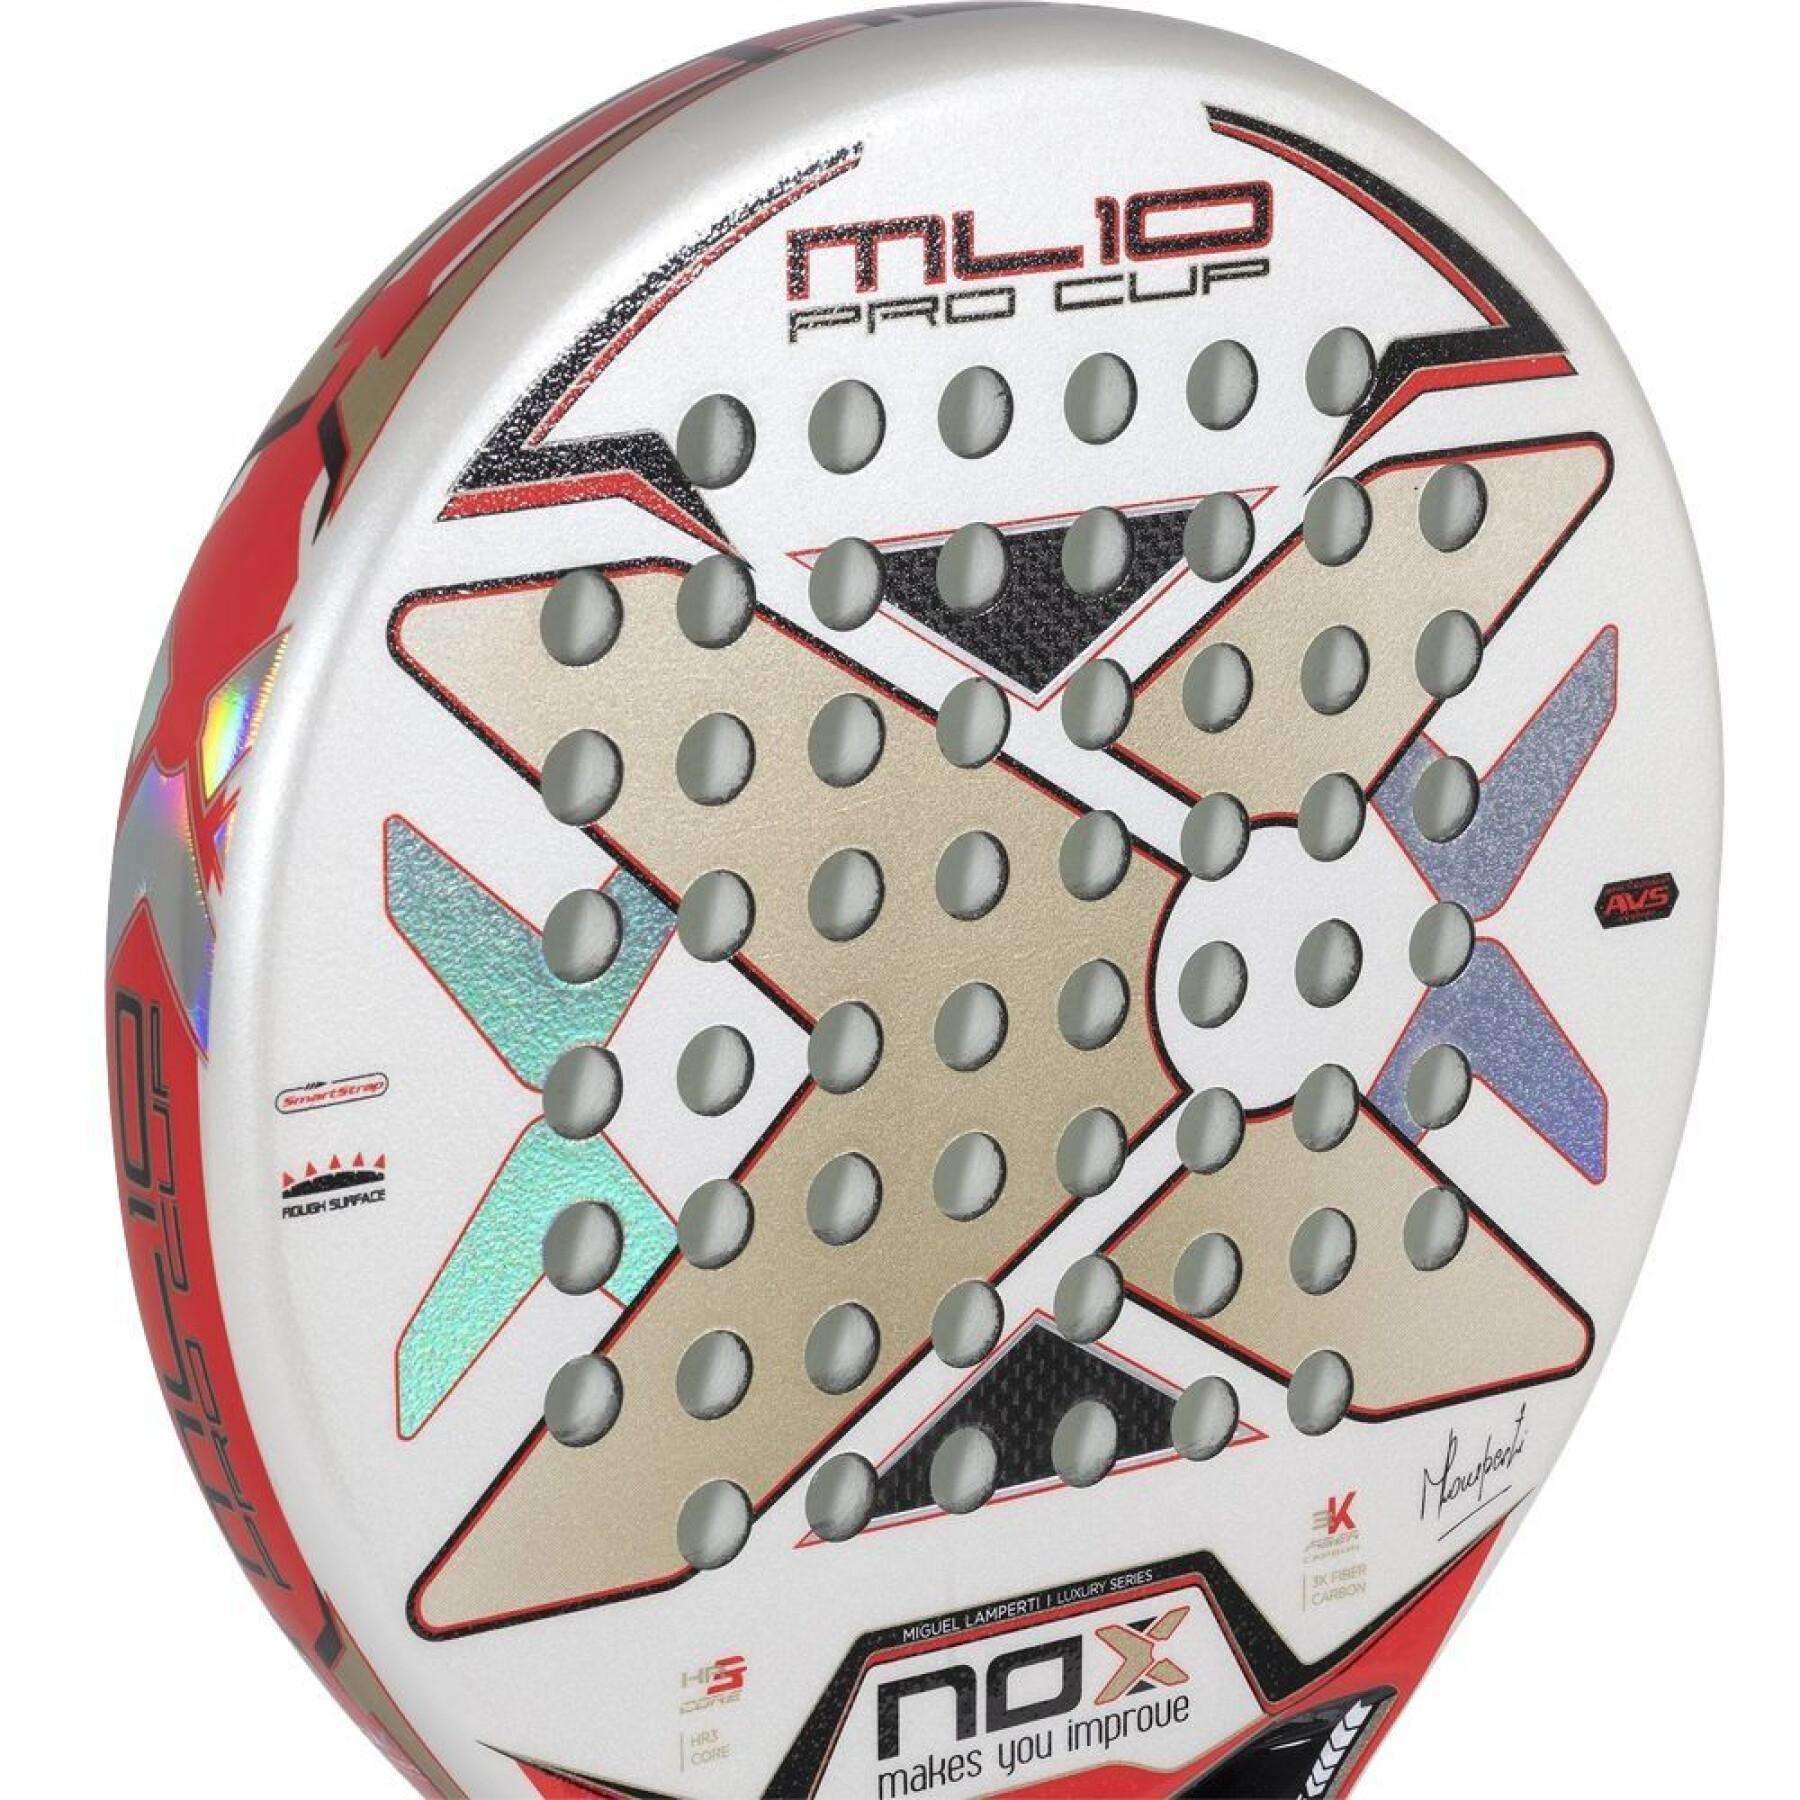 Racket from padel Nox ML10 Pro Cup Luxury Series